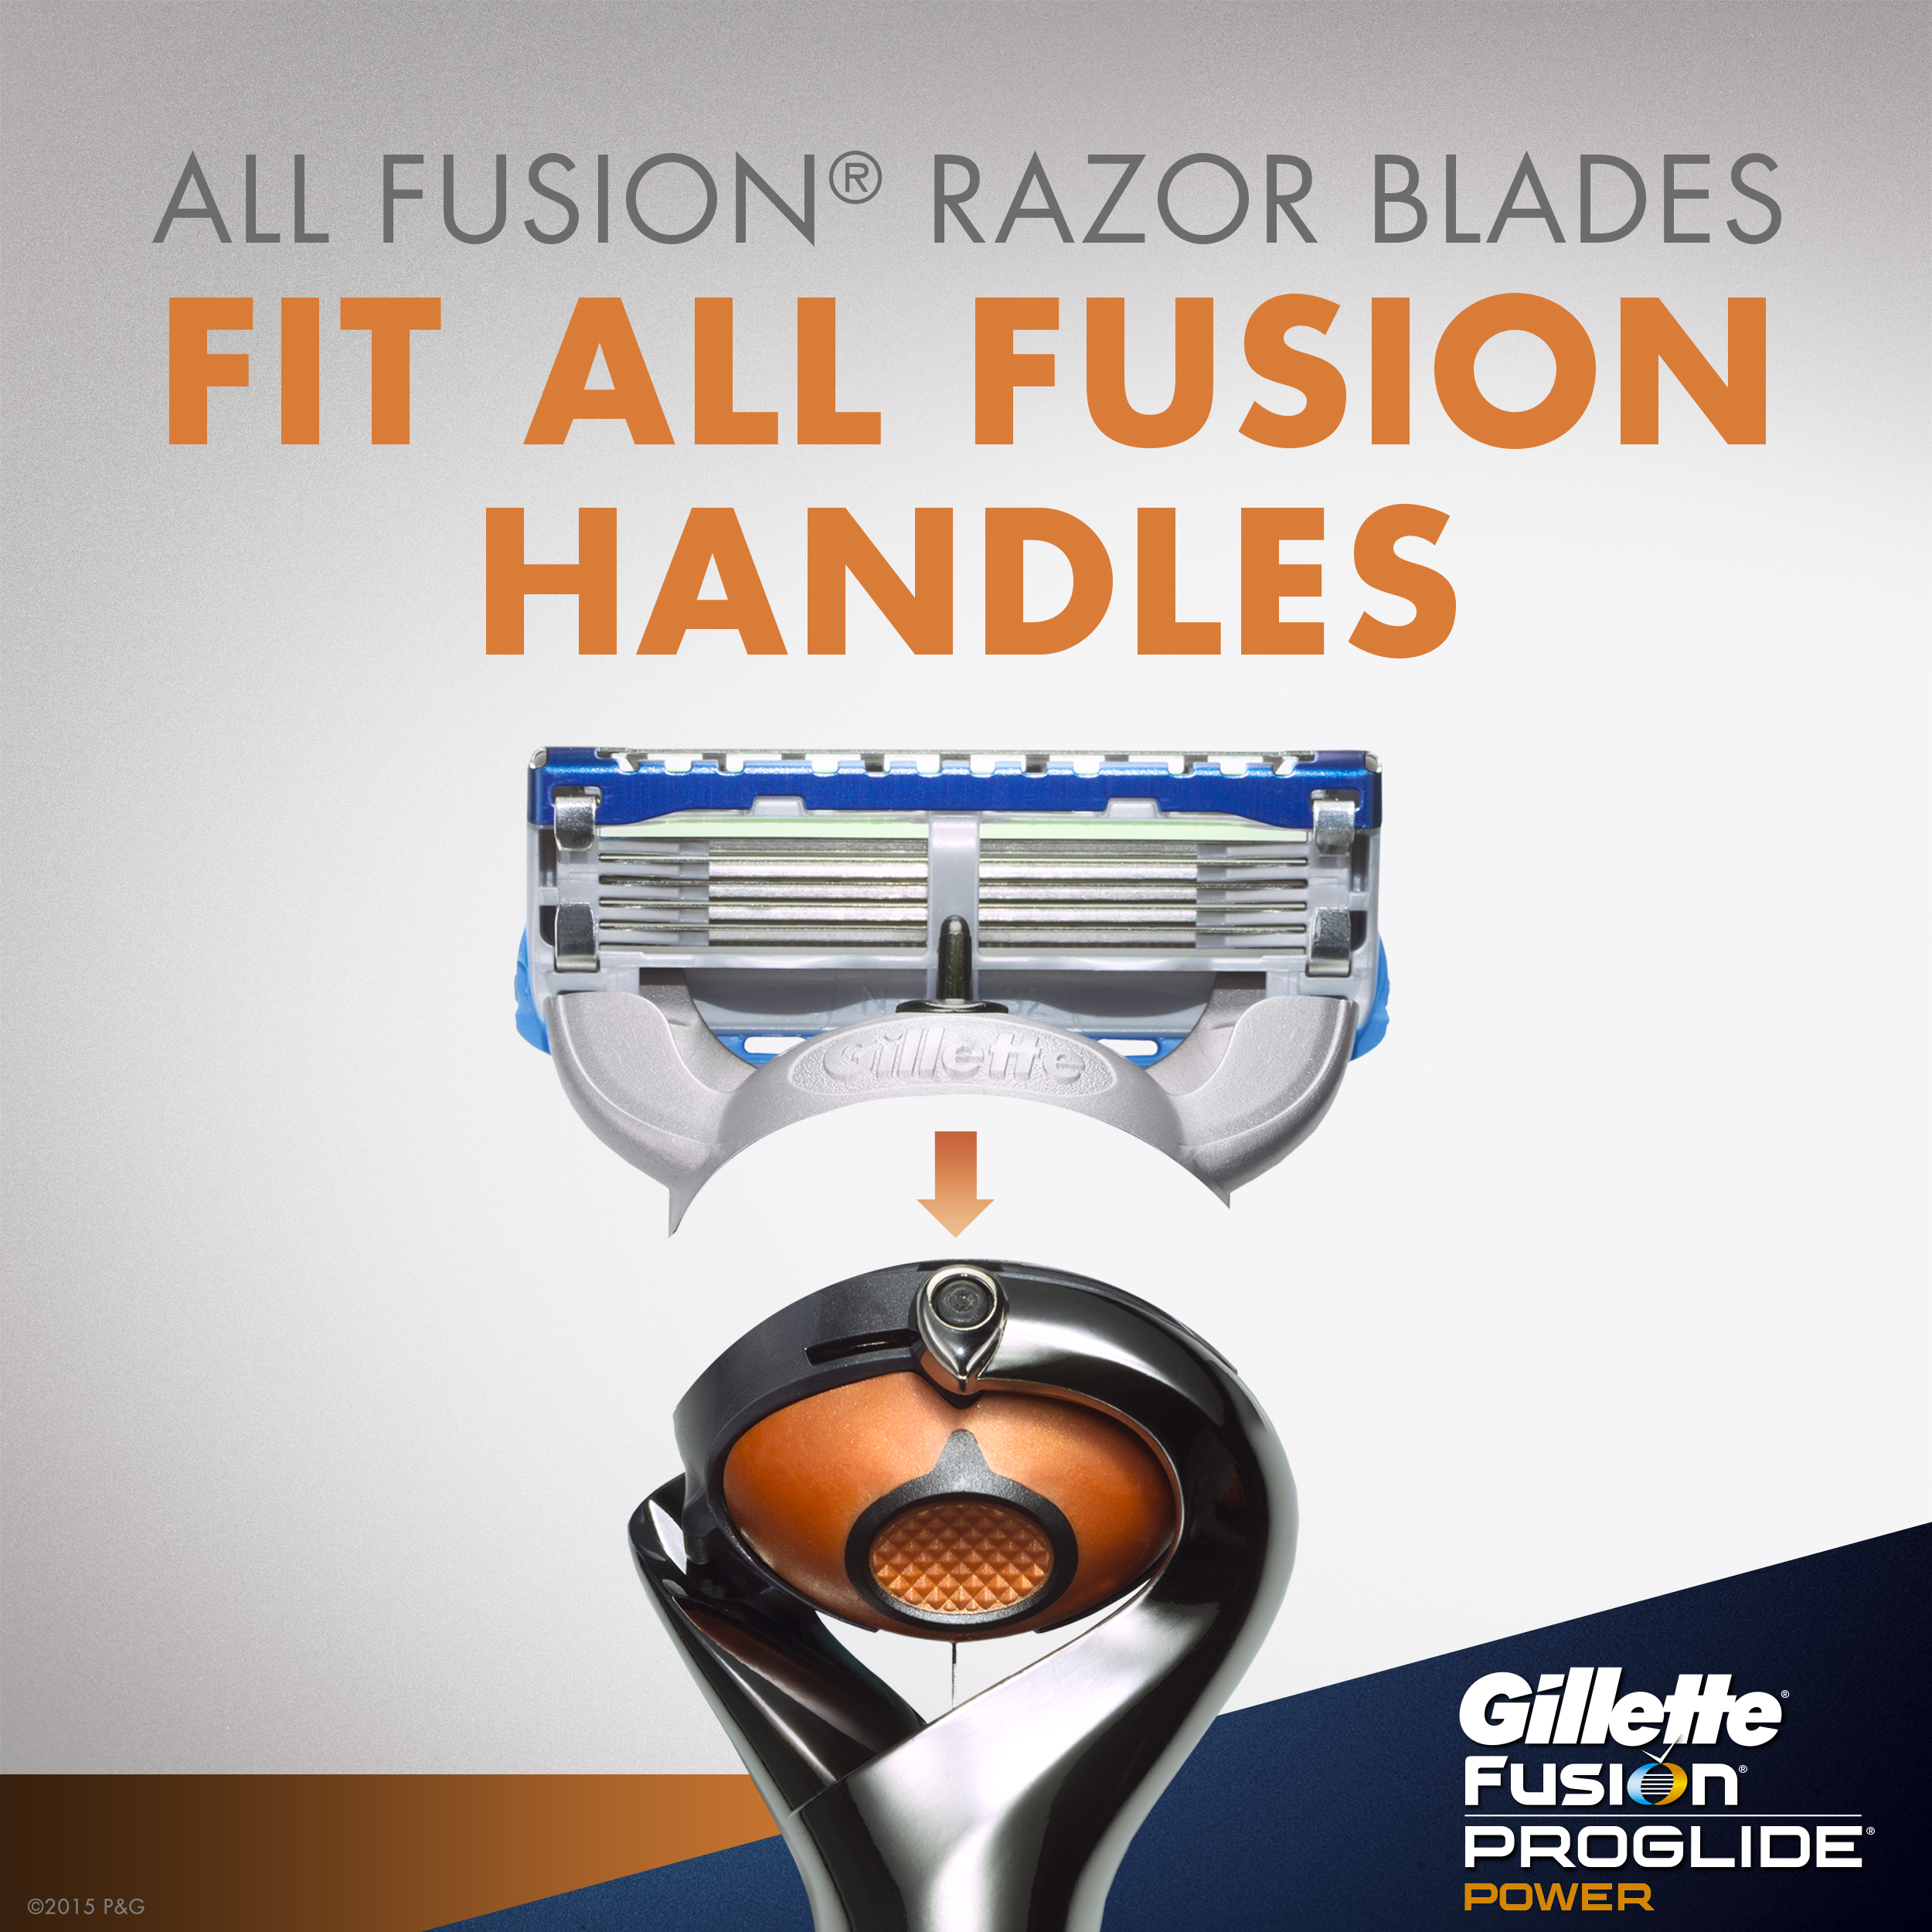 Gillette Fusion ProGlide Power Men's Razor with FlexBall Handle Technology, 6 Razors Blades, 1 Kit - image 5 of 7